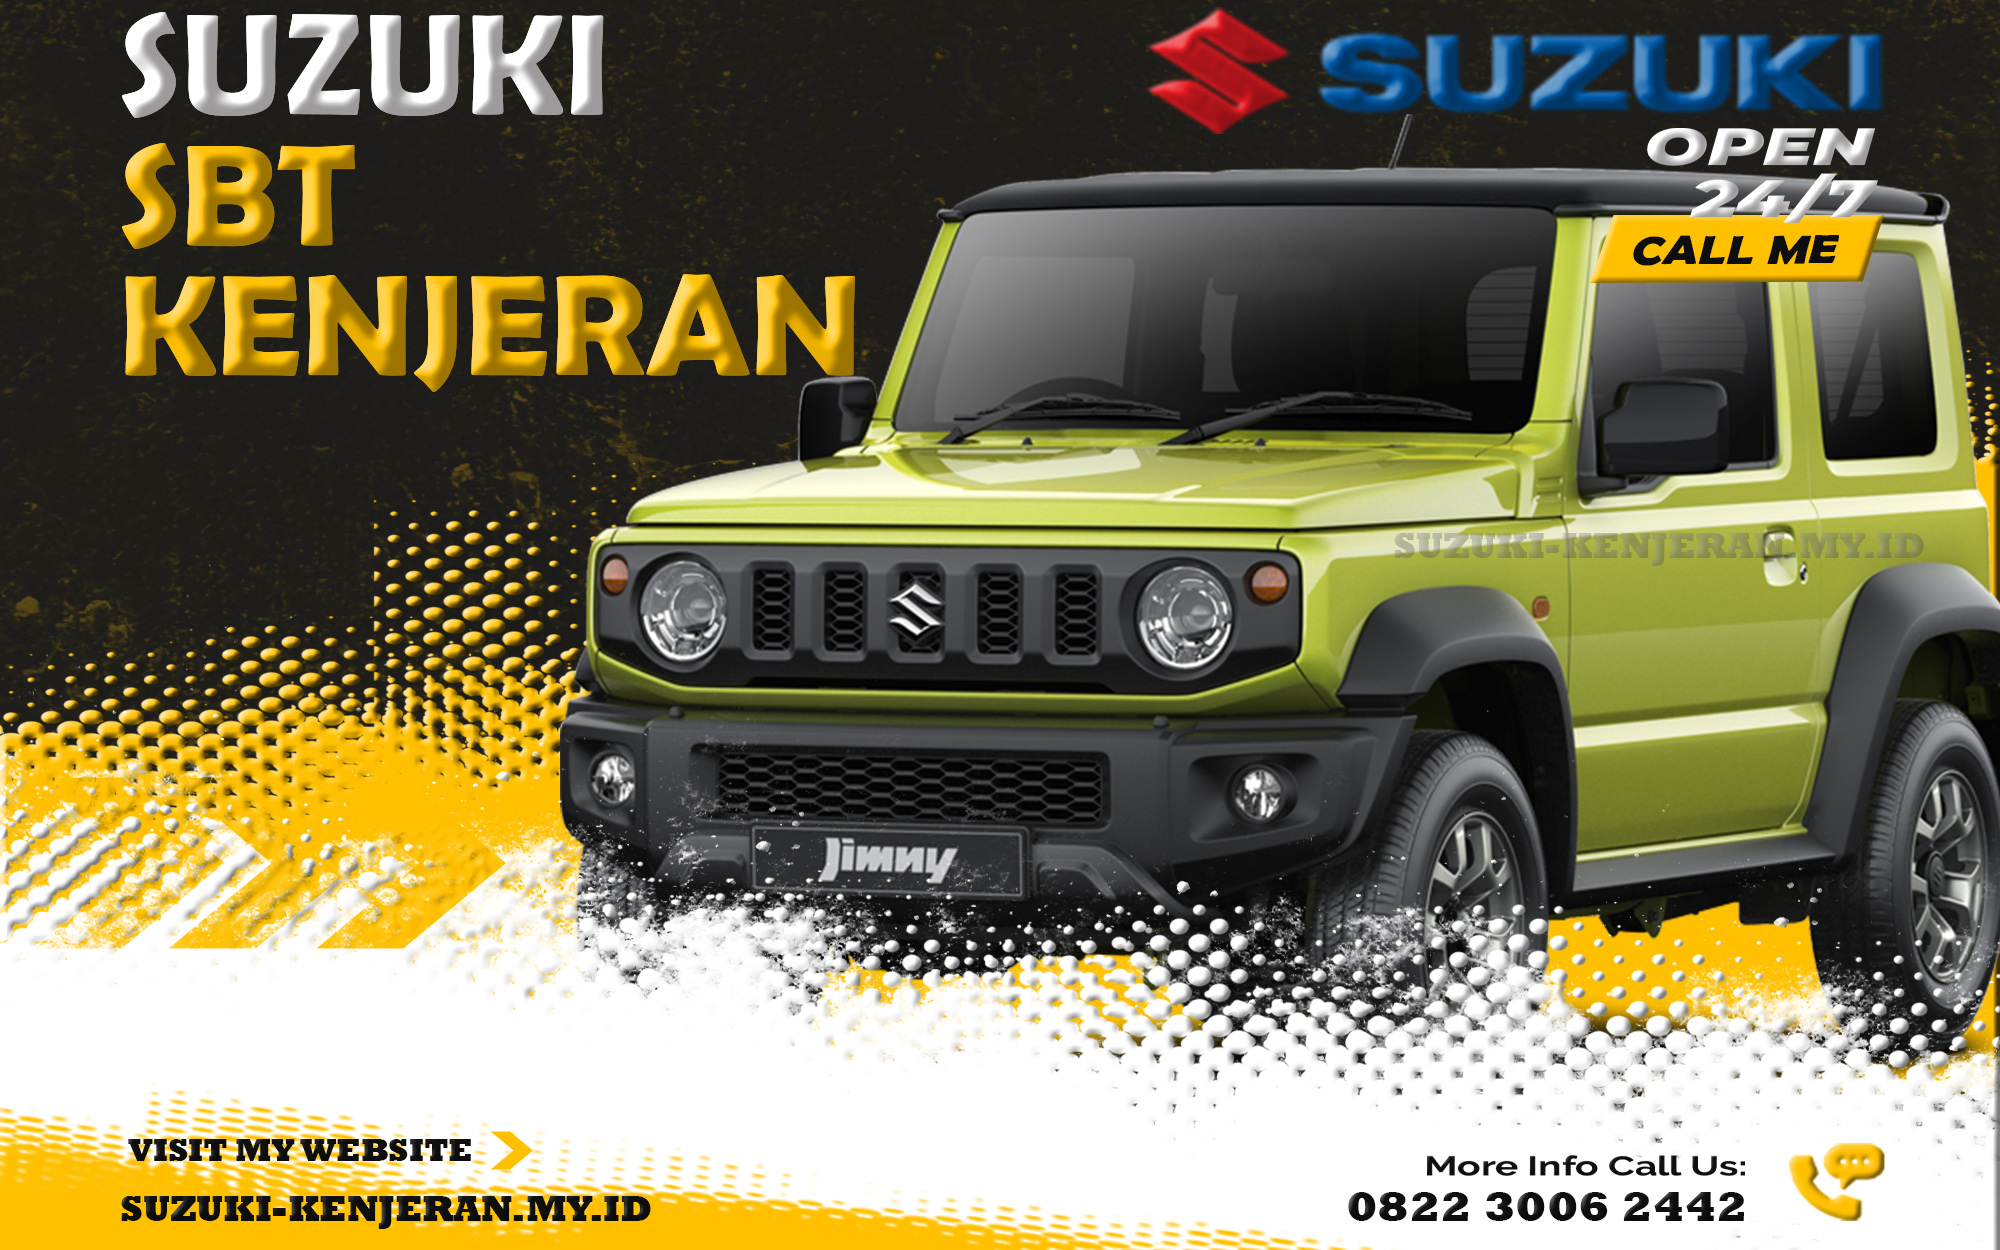 Suzuki SBT Kenjeran